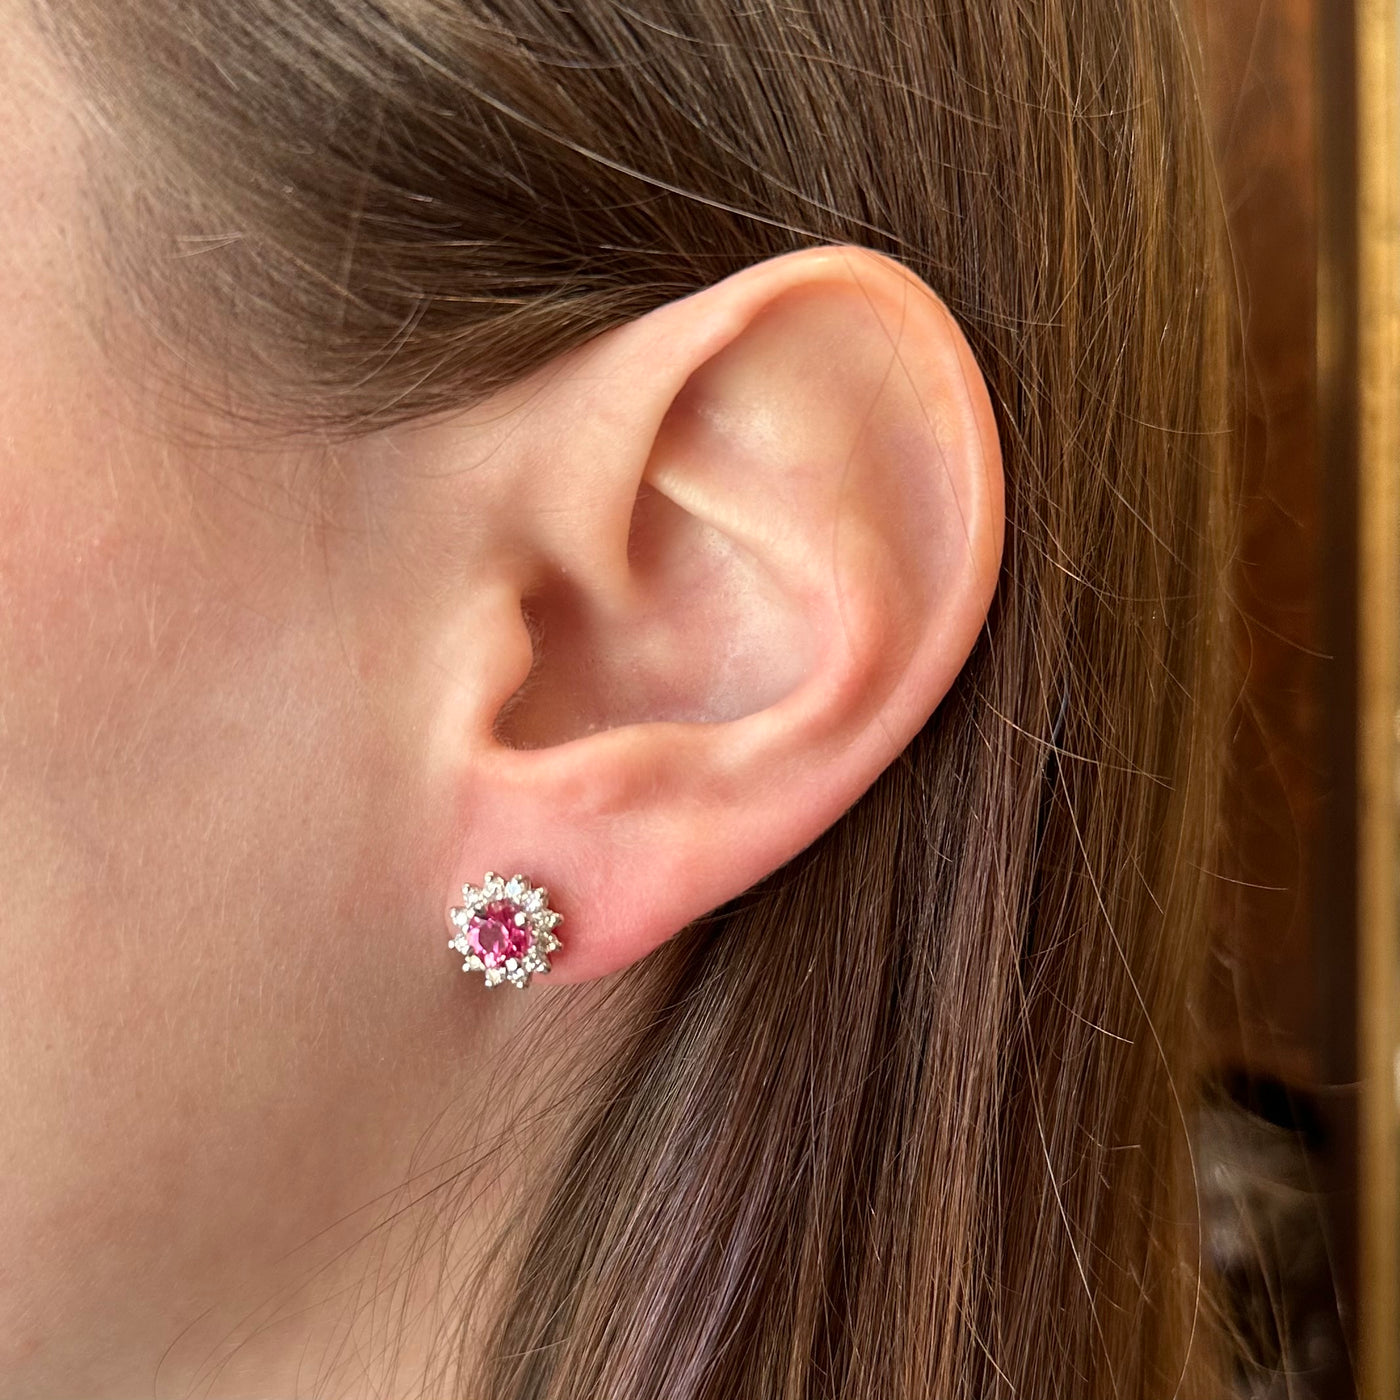 14K White Gold 1.20 CTW Pink Tourmaline and Diamond Stud Earrings